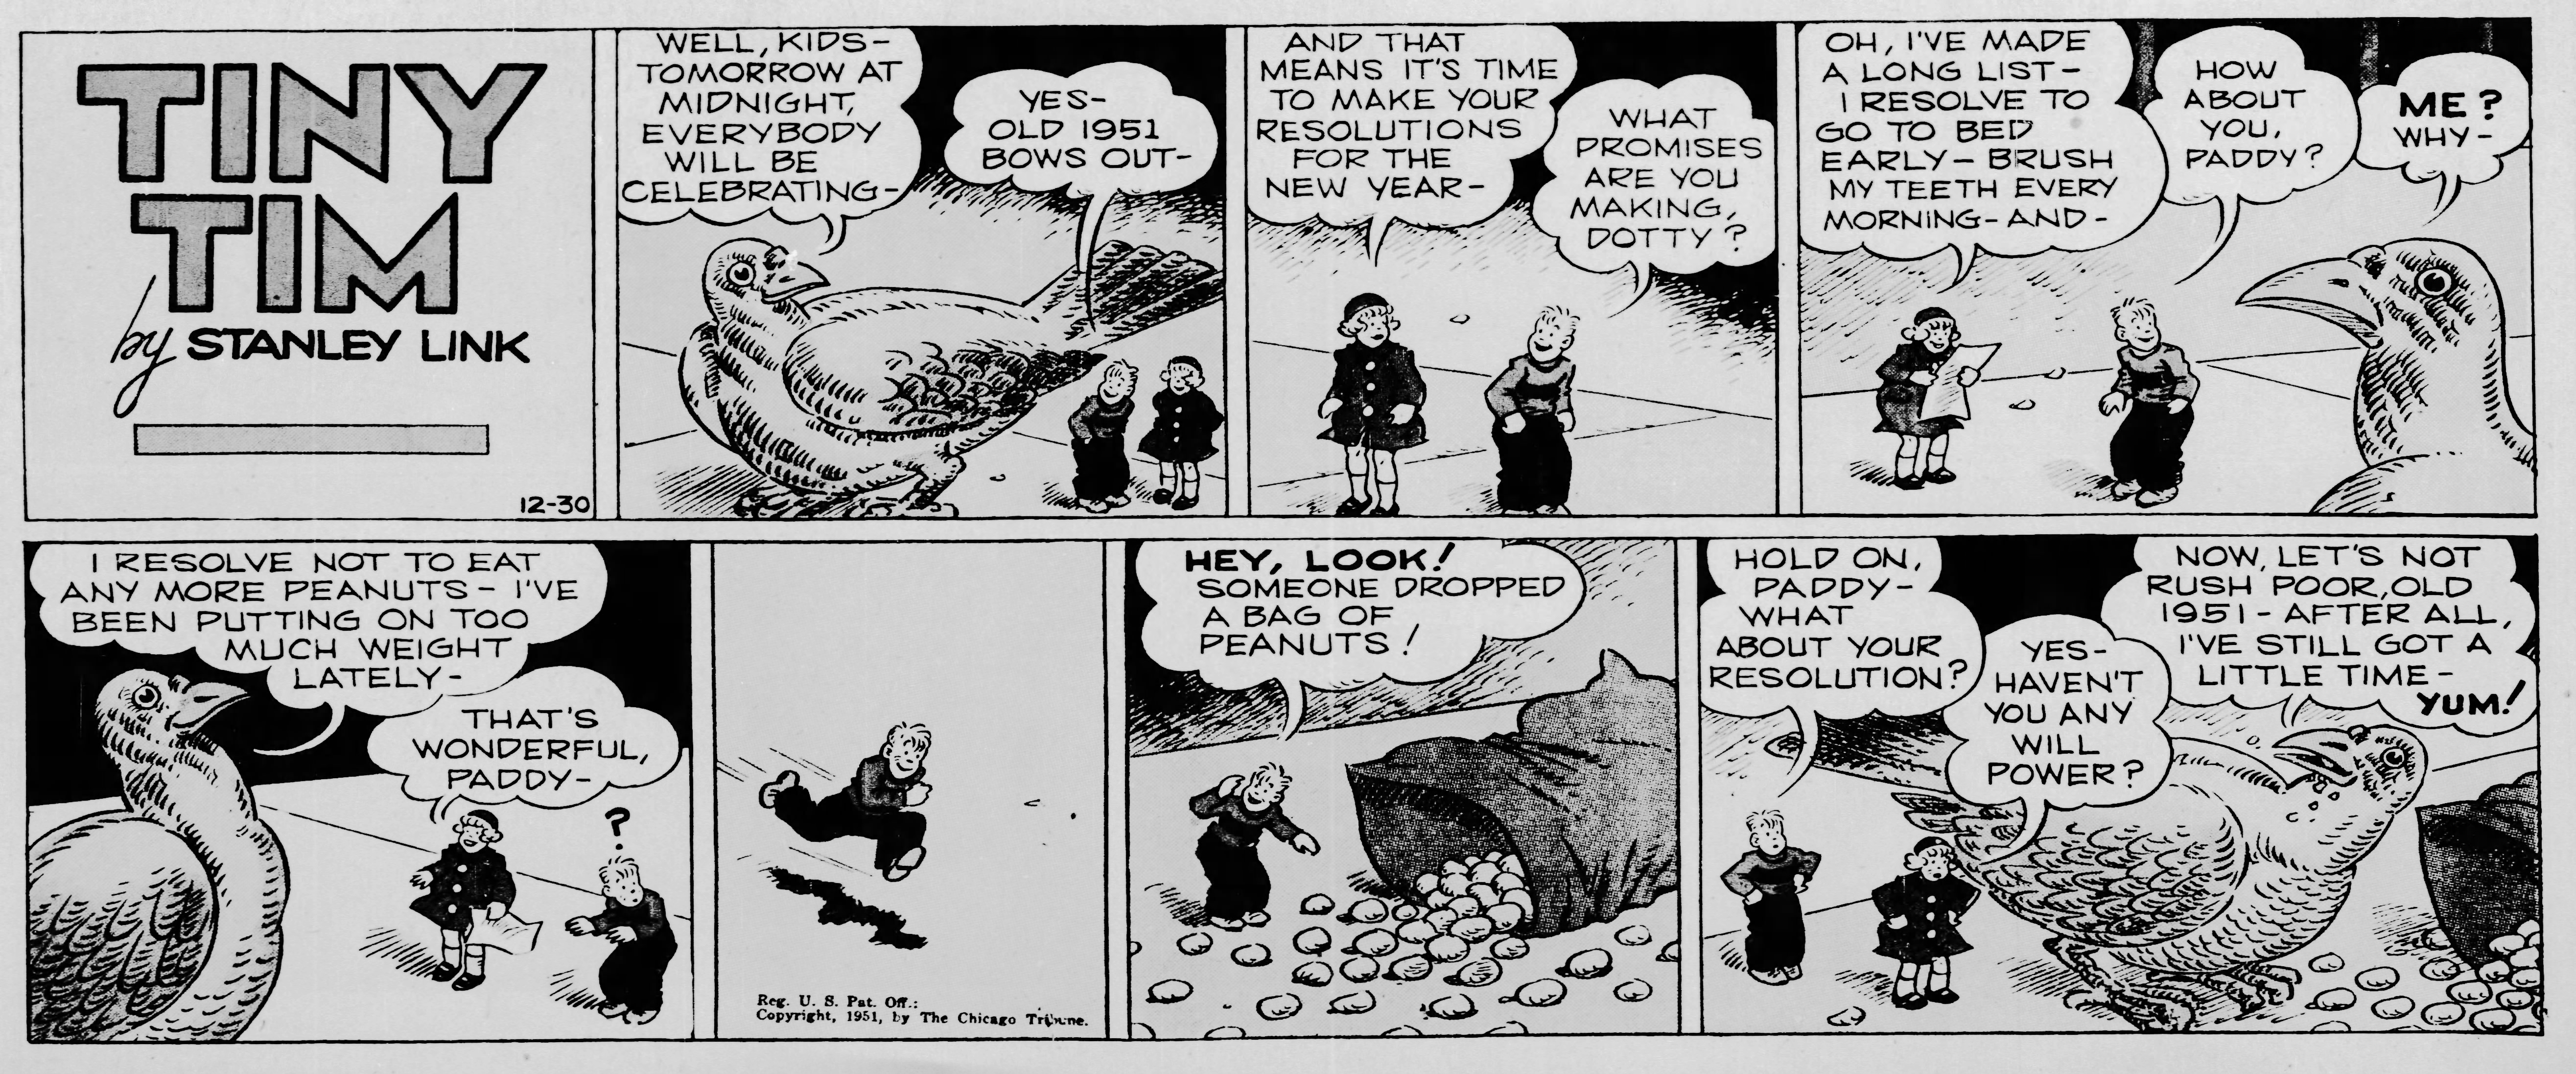 Tiny Tim, December 30, 1951